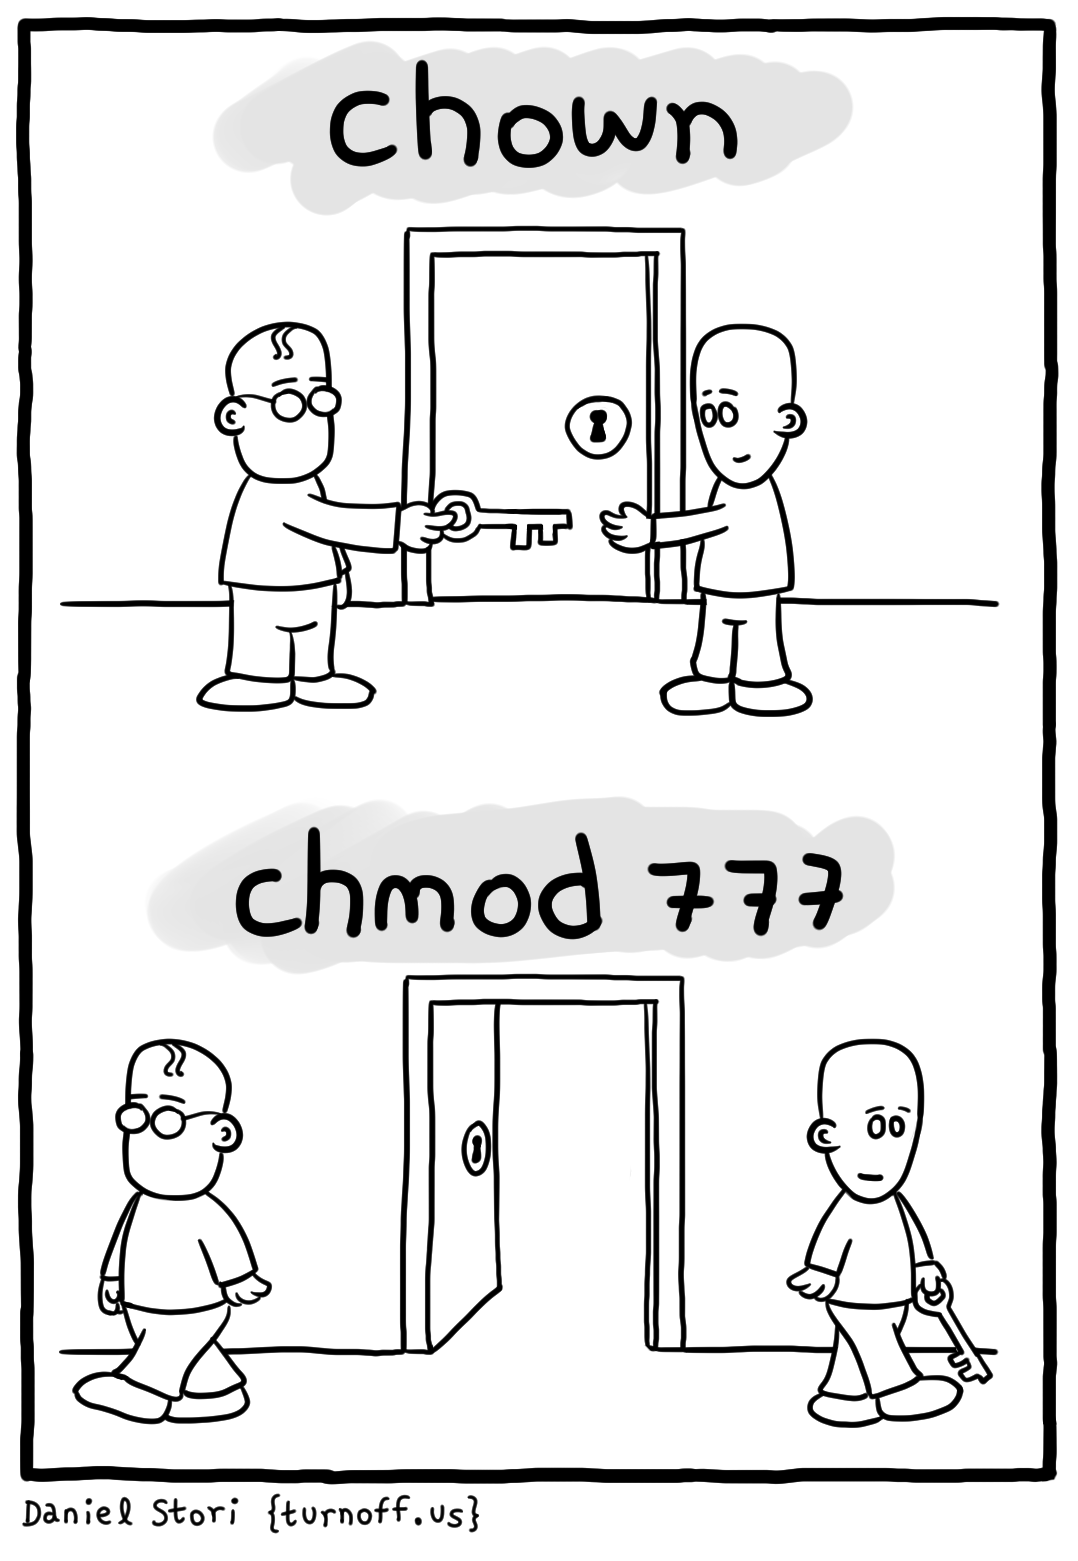 Chown Chmod